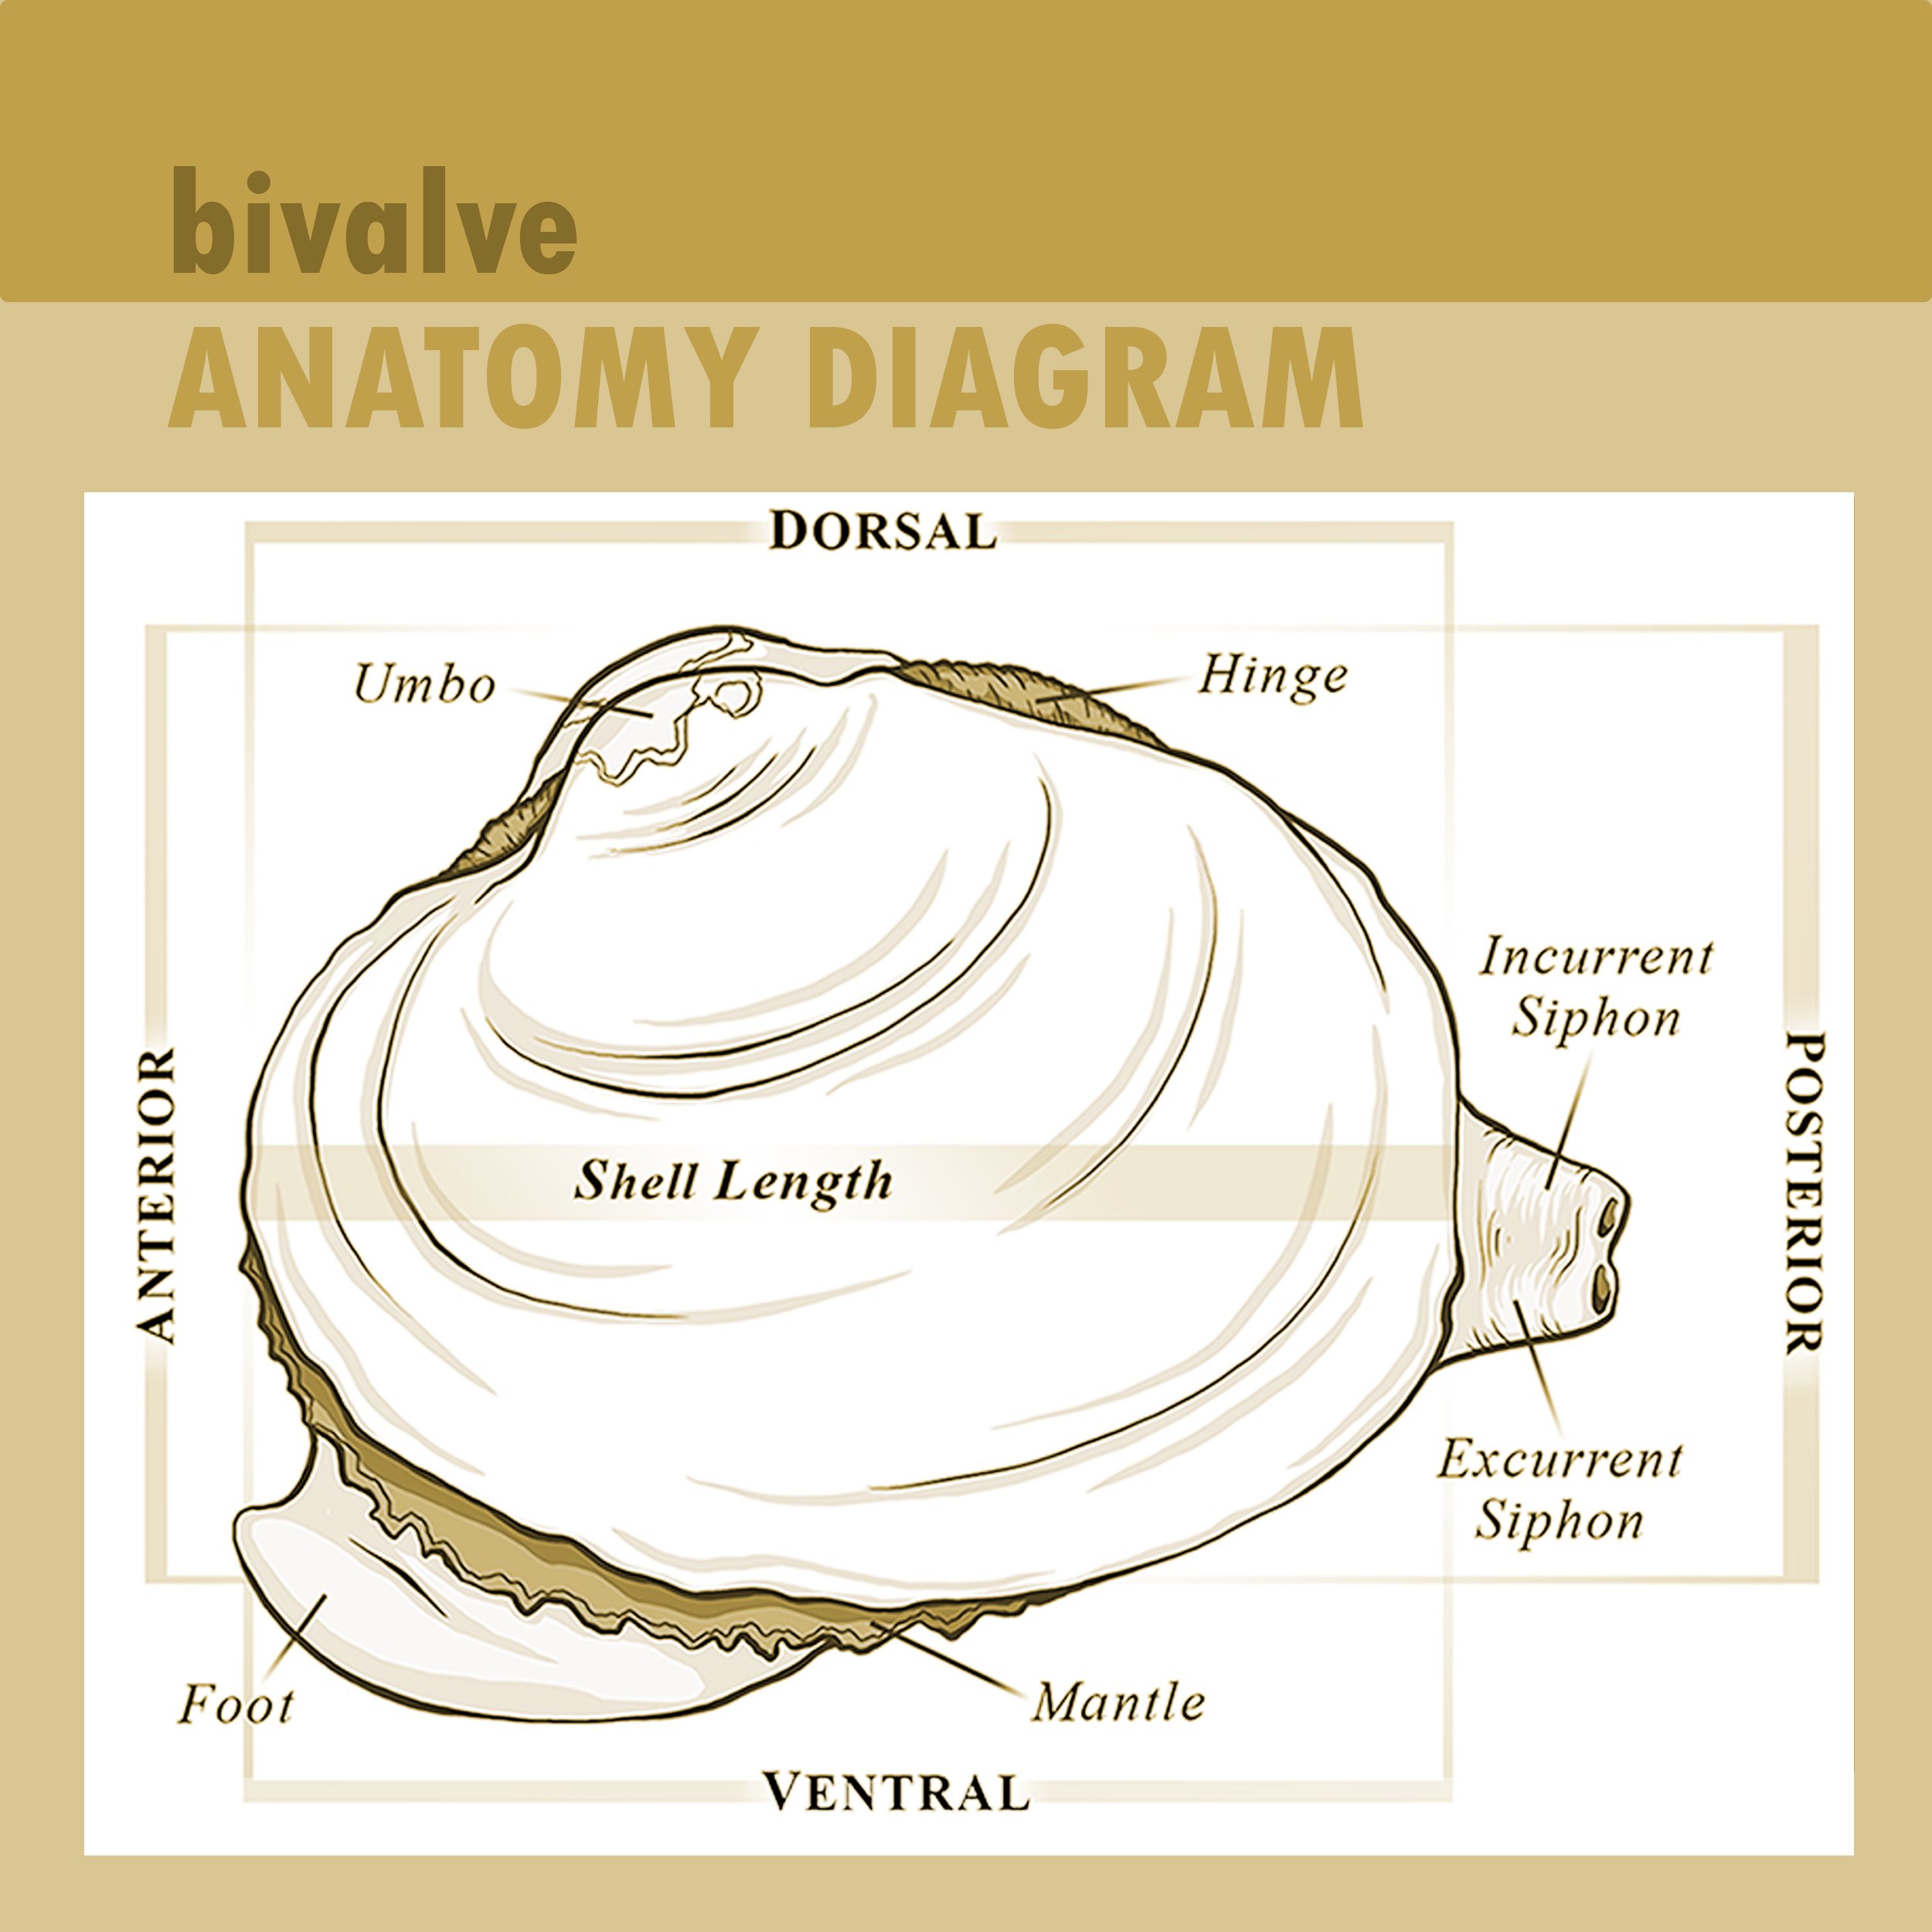 Diagram_Bivalve Anatomy2.jpg